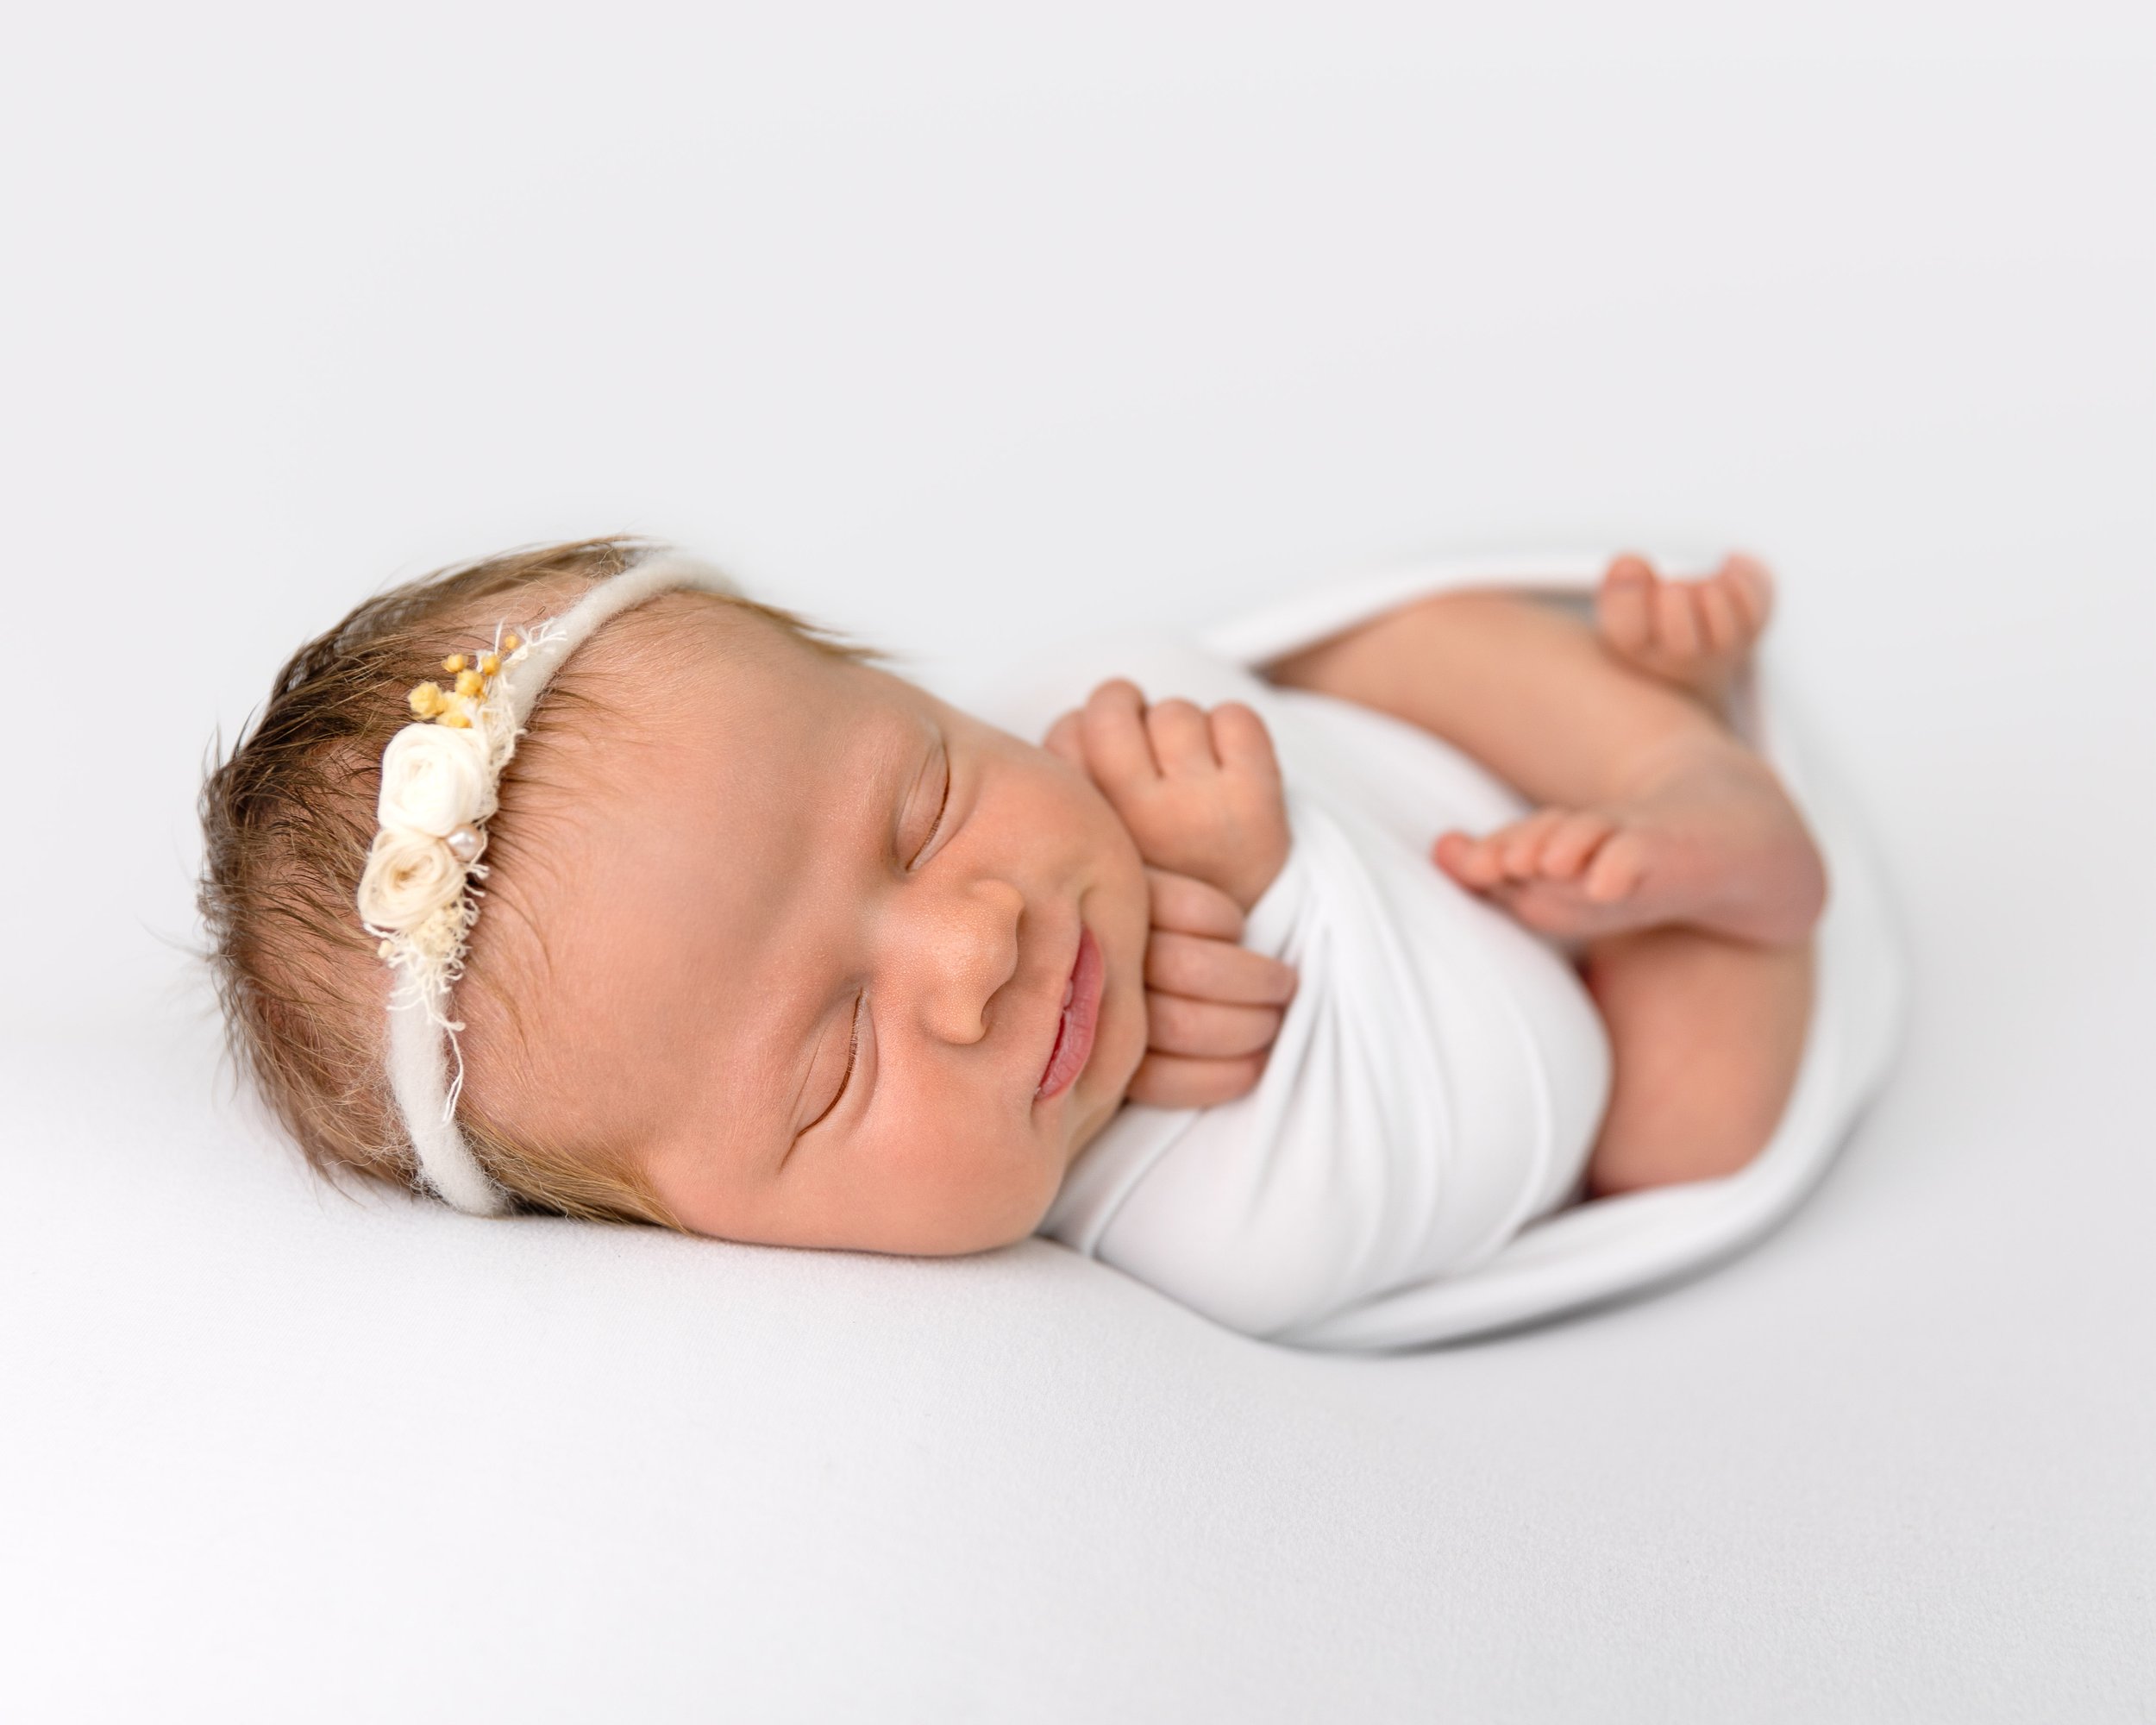 Newborn-photography-baby-images-family-photos-spokane-washington-7.jpg